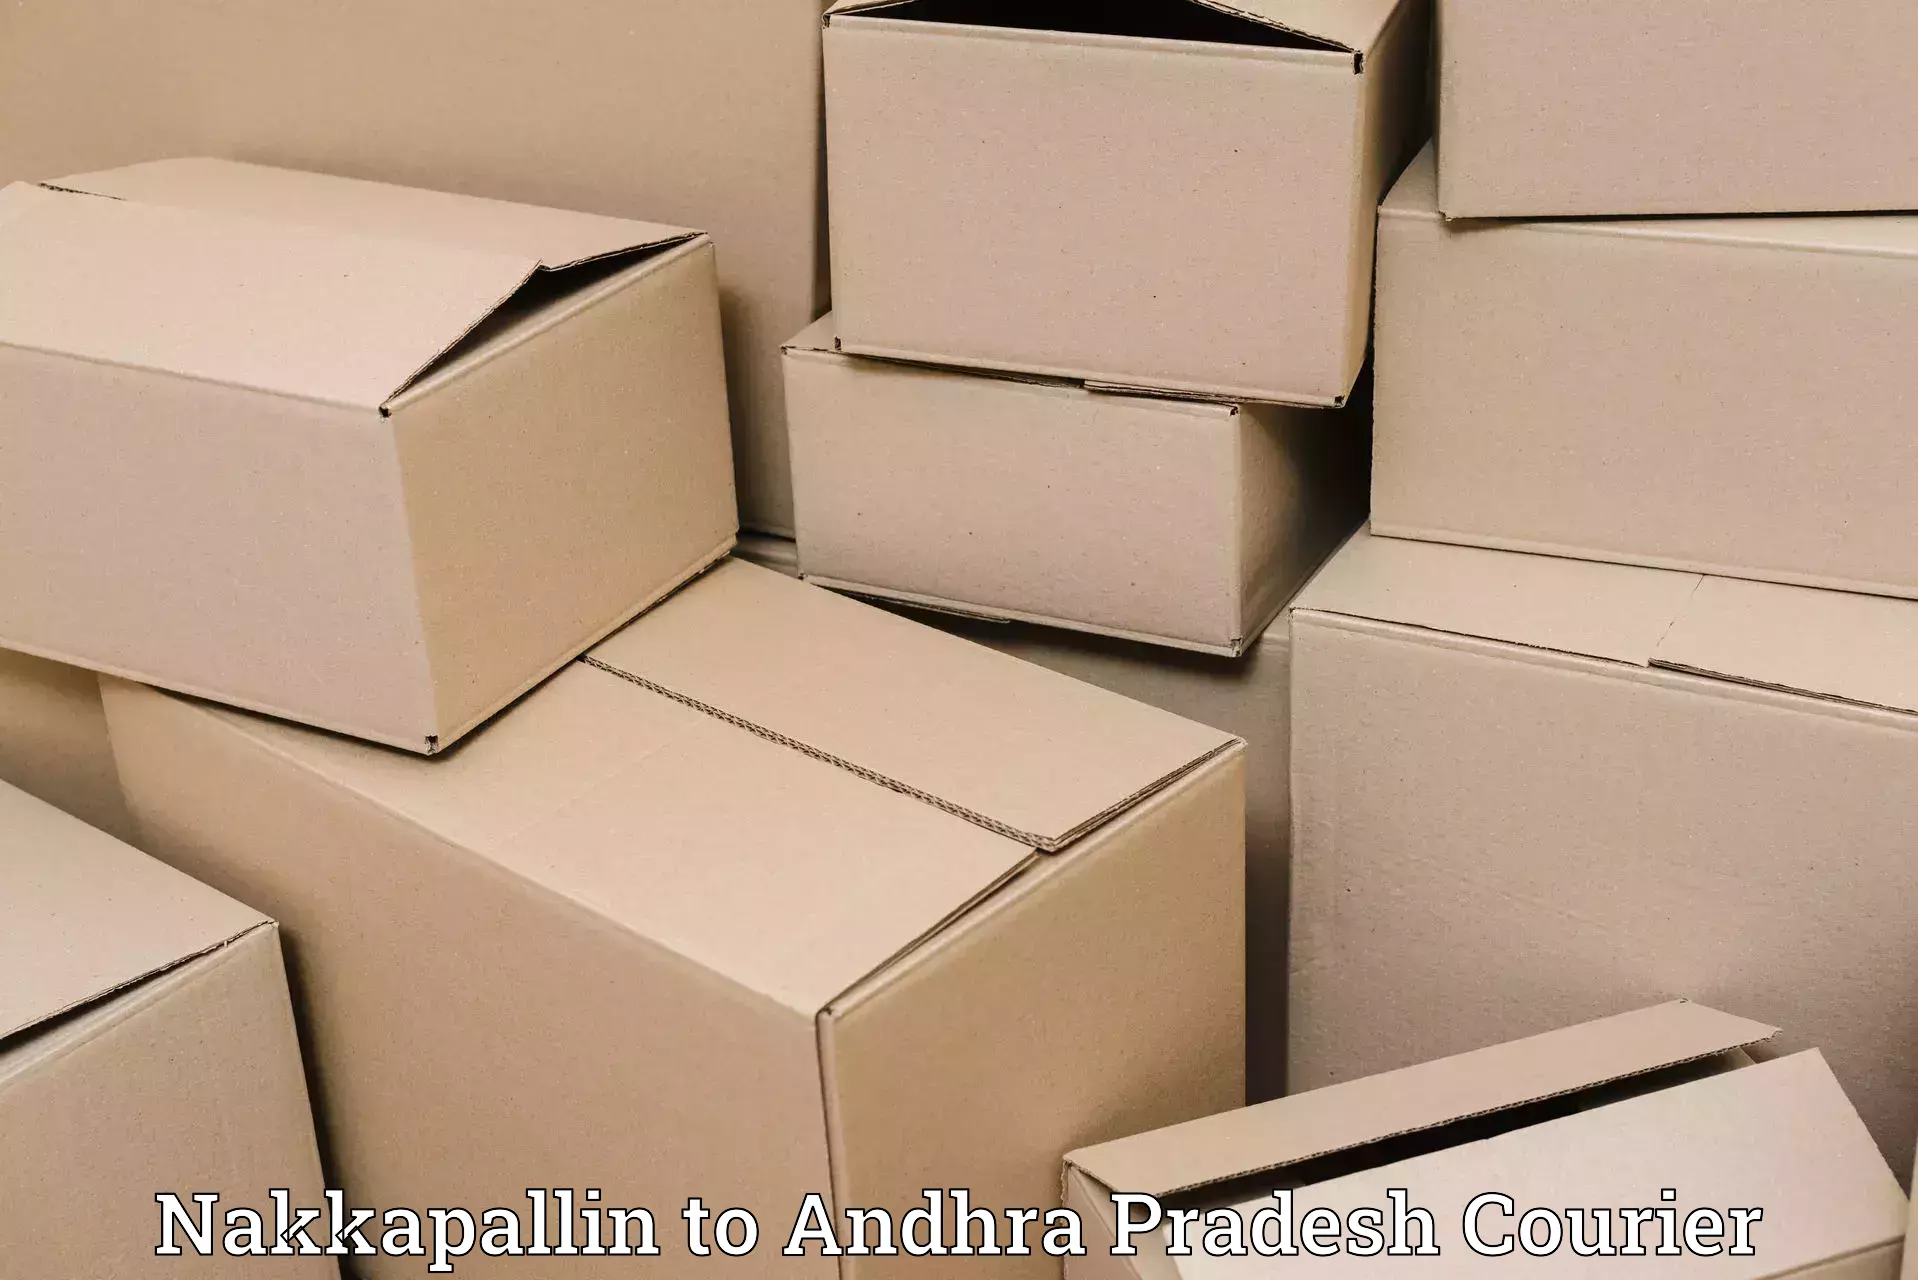 Expedited shipping methods Nakkapallin to Machilipatnam